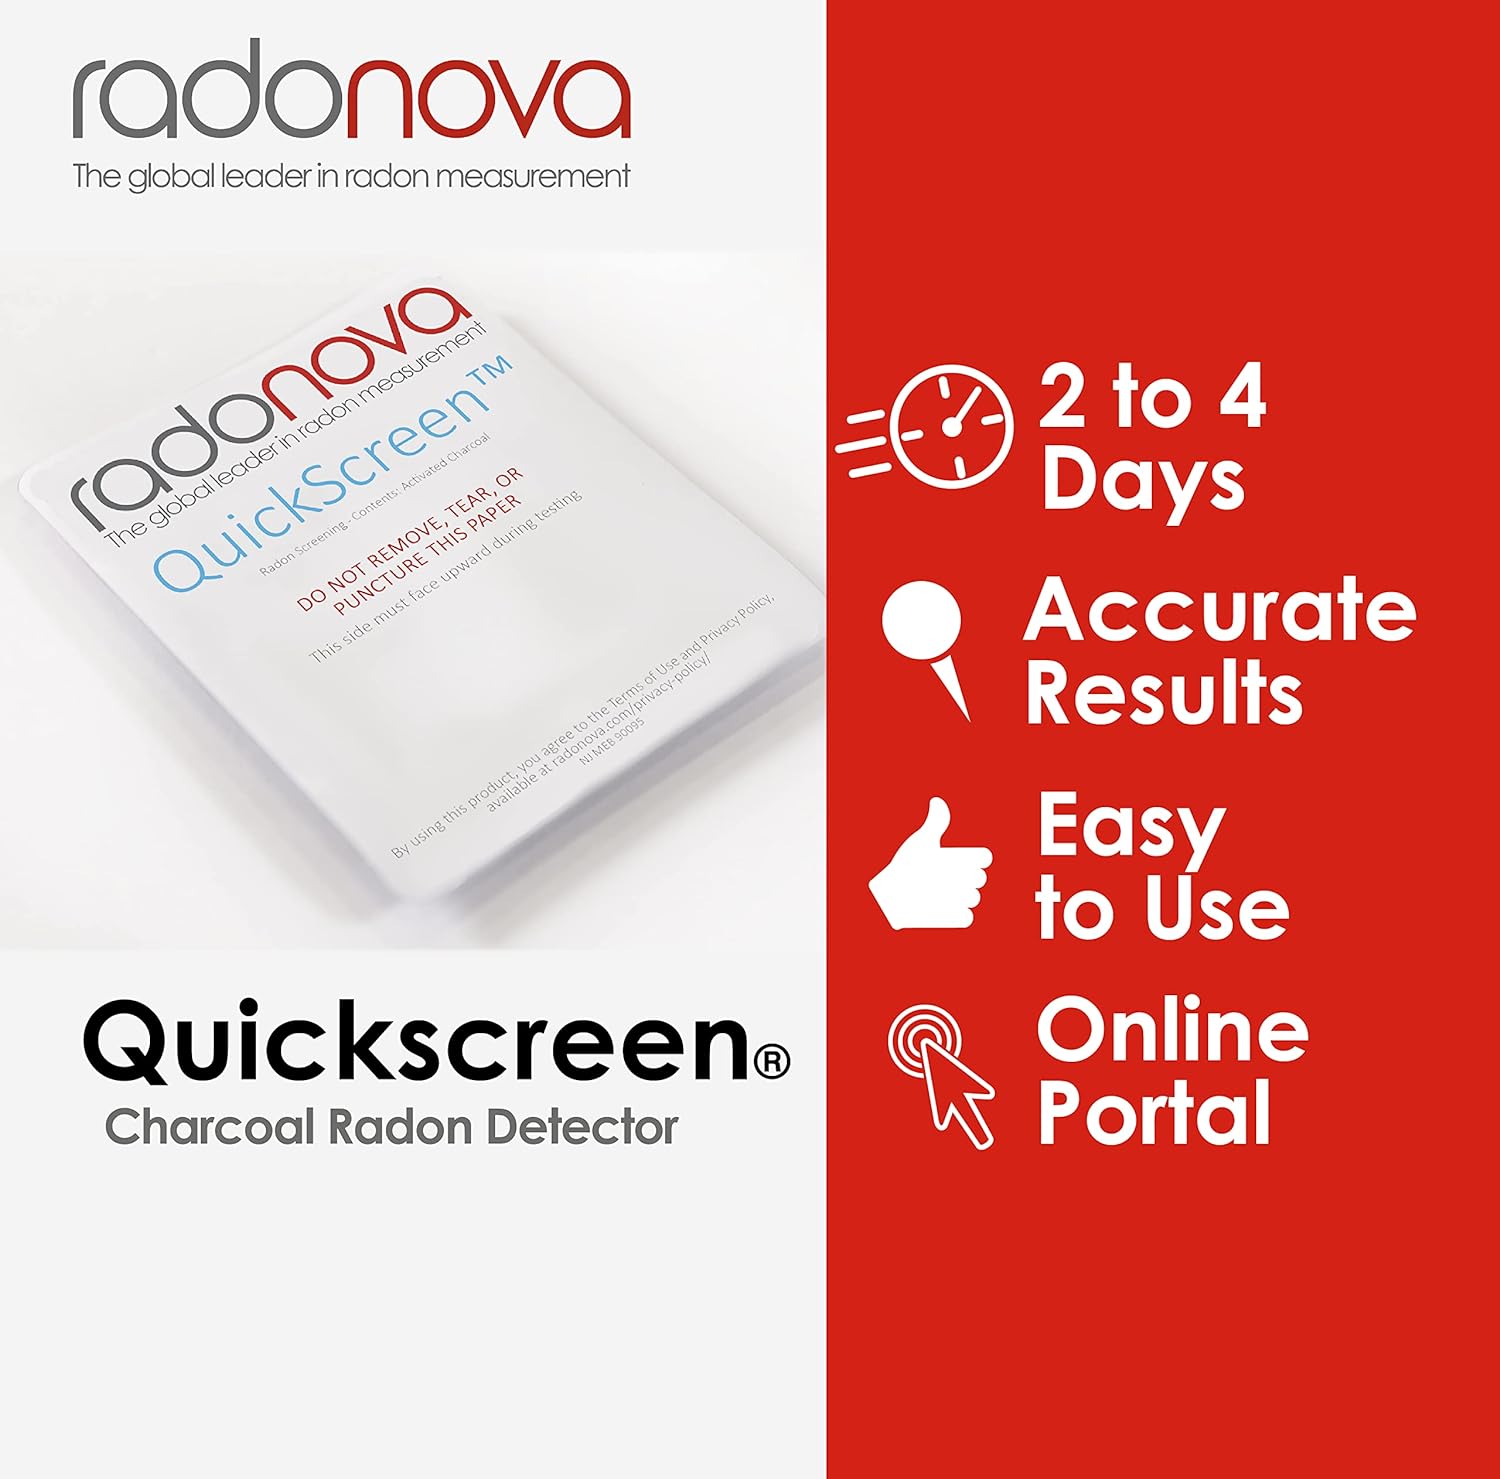 Generic Radonova Quickscreen Home Radon